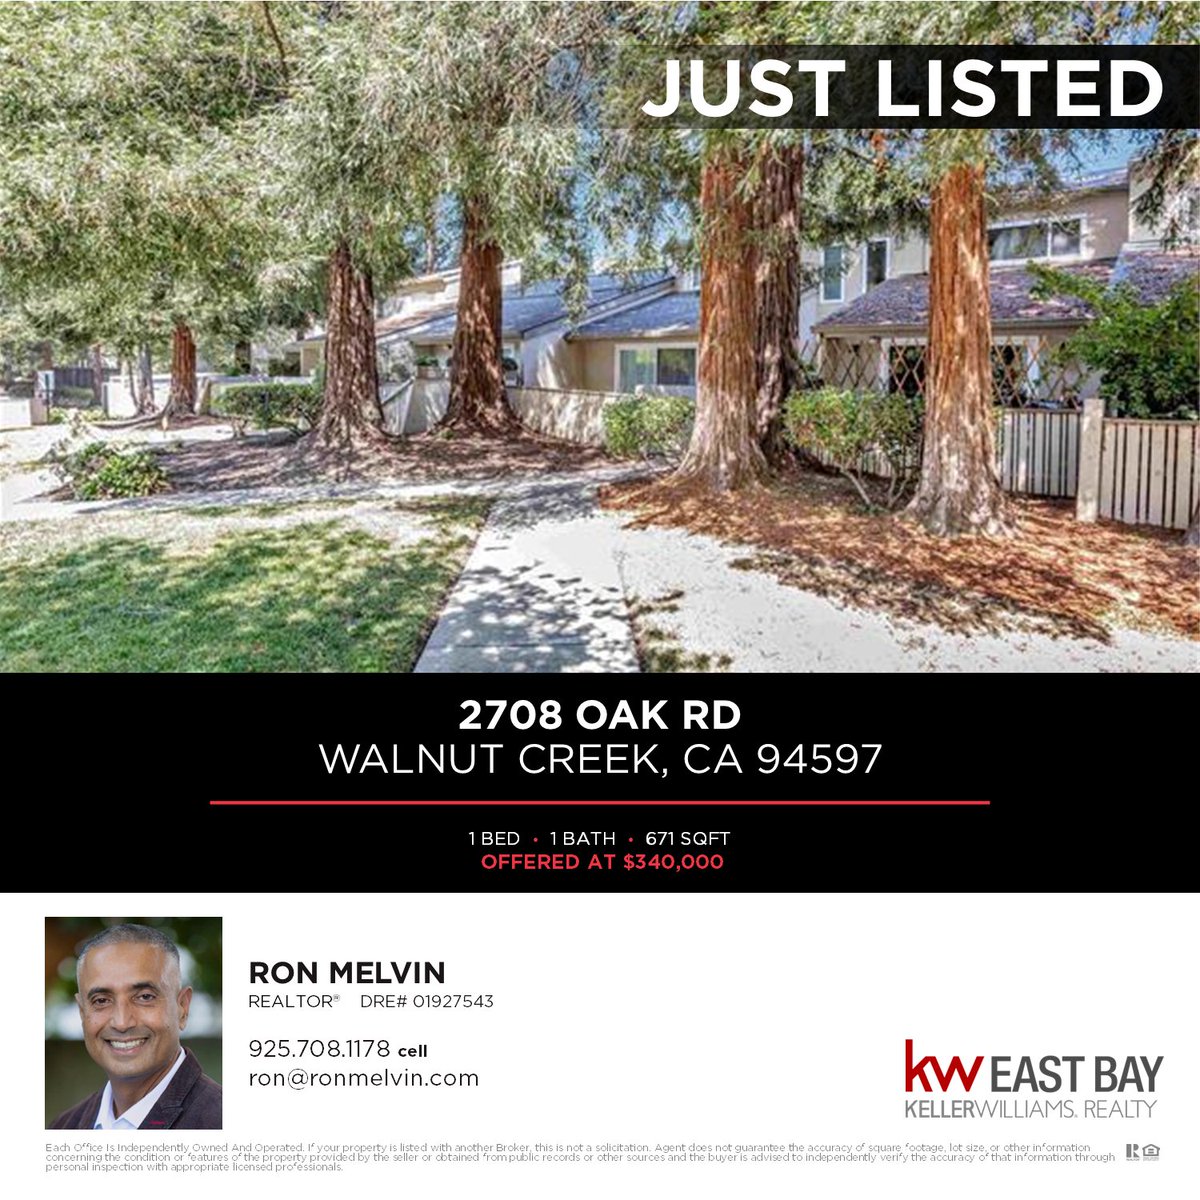 2708 Oak Rd, Walnut Creek, CA 94597 - Just Listed by Ron Melvin!

#kellerwilliams #bayarearealestate #bayarearealtor